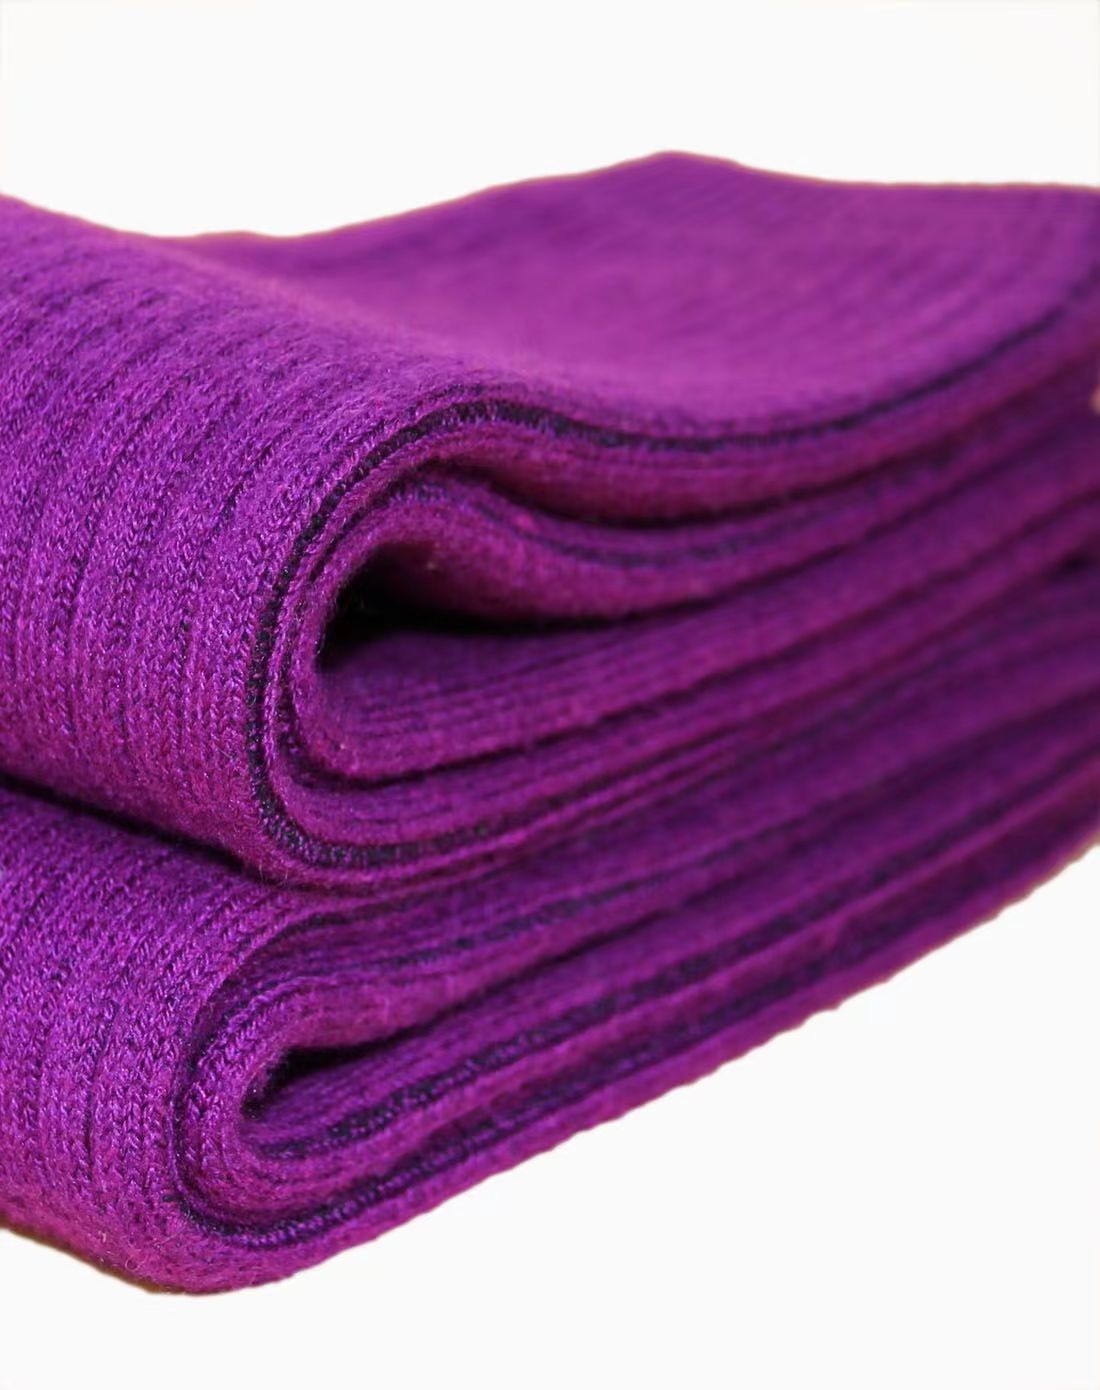 Vat Violet 2R for dyeing cotton